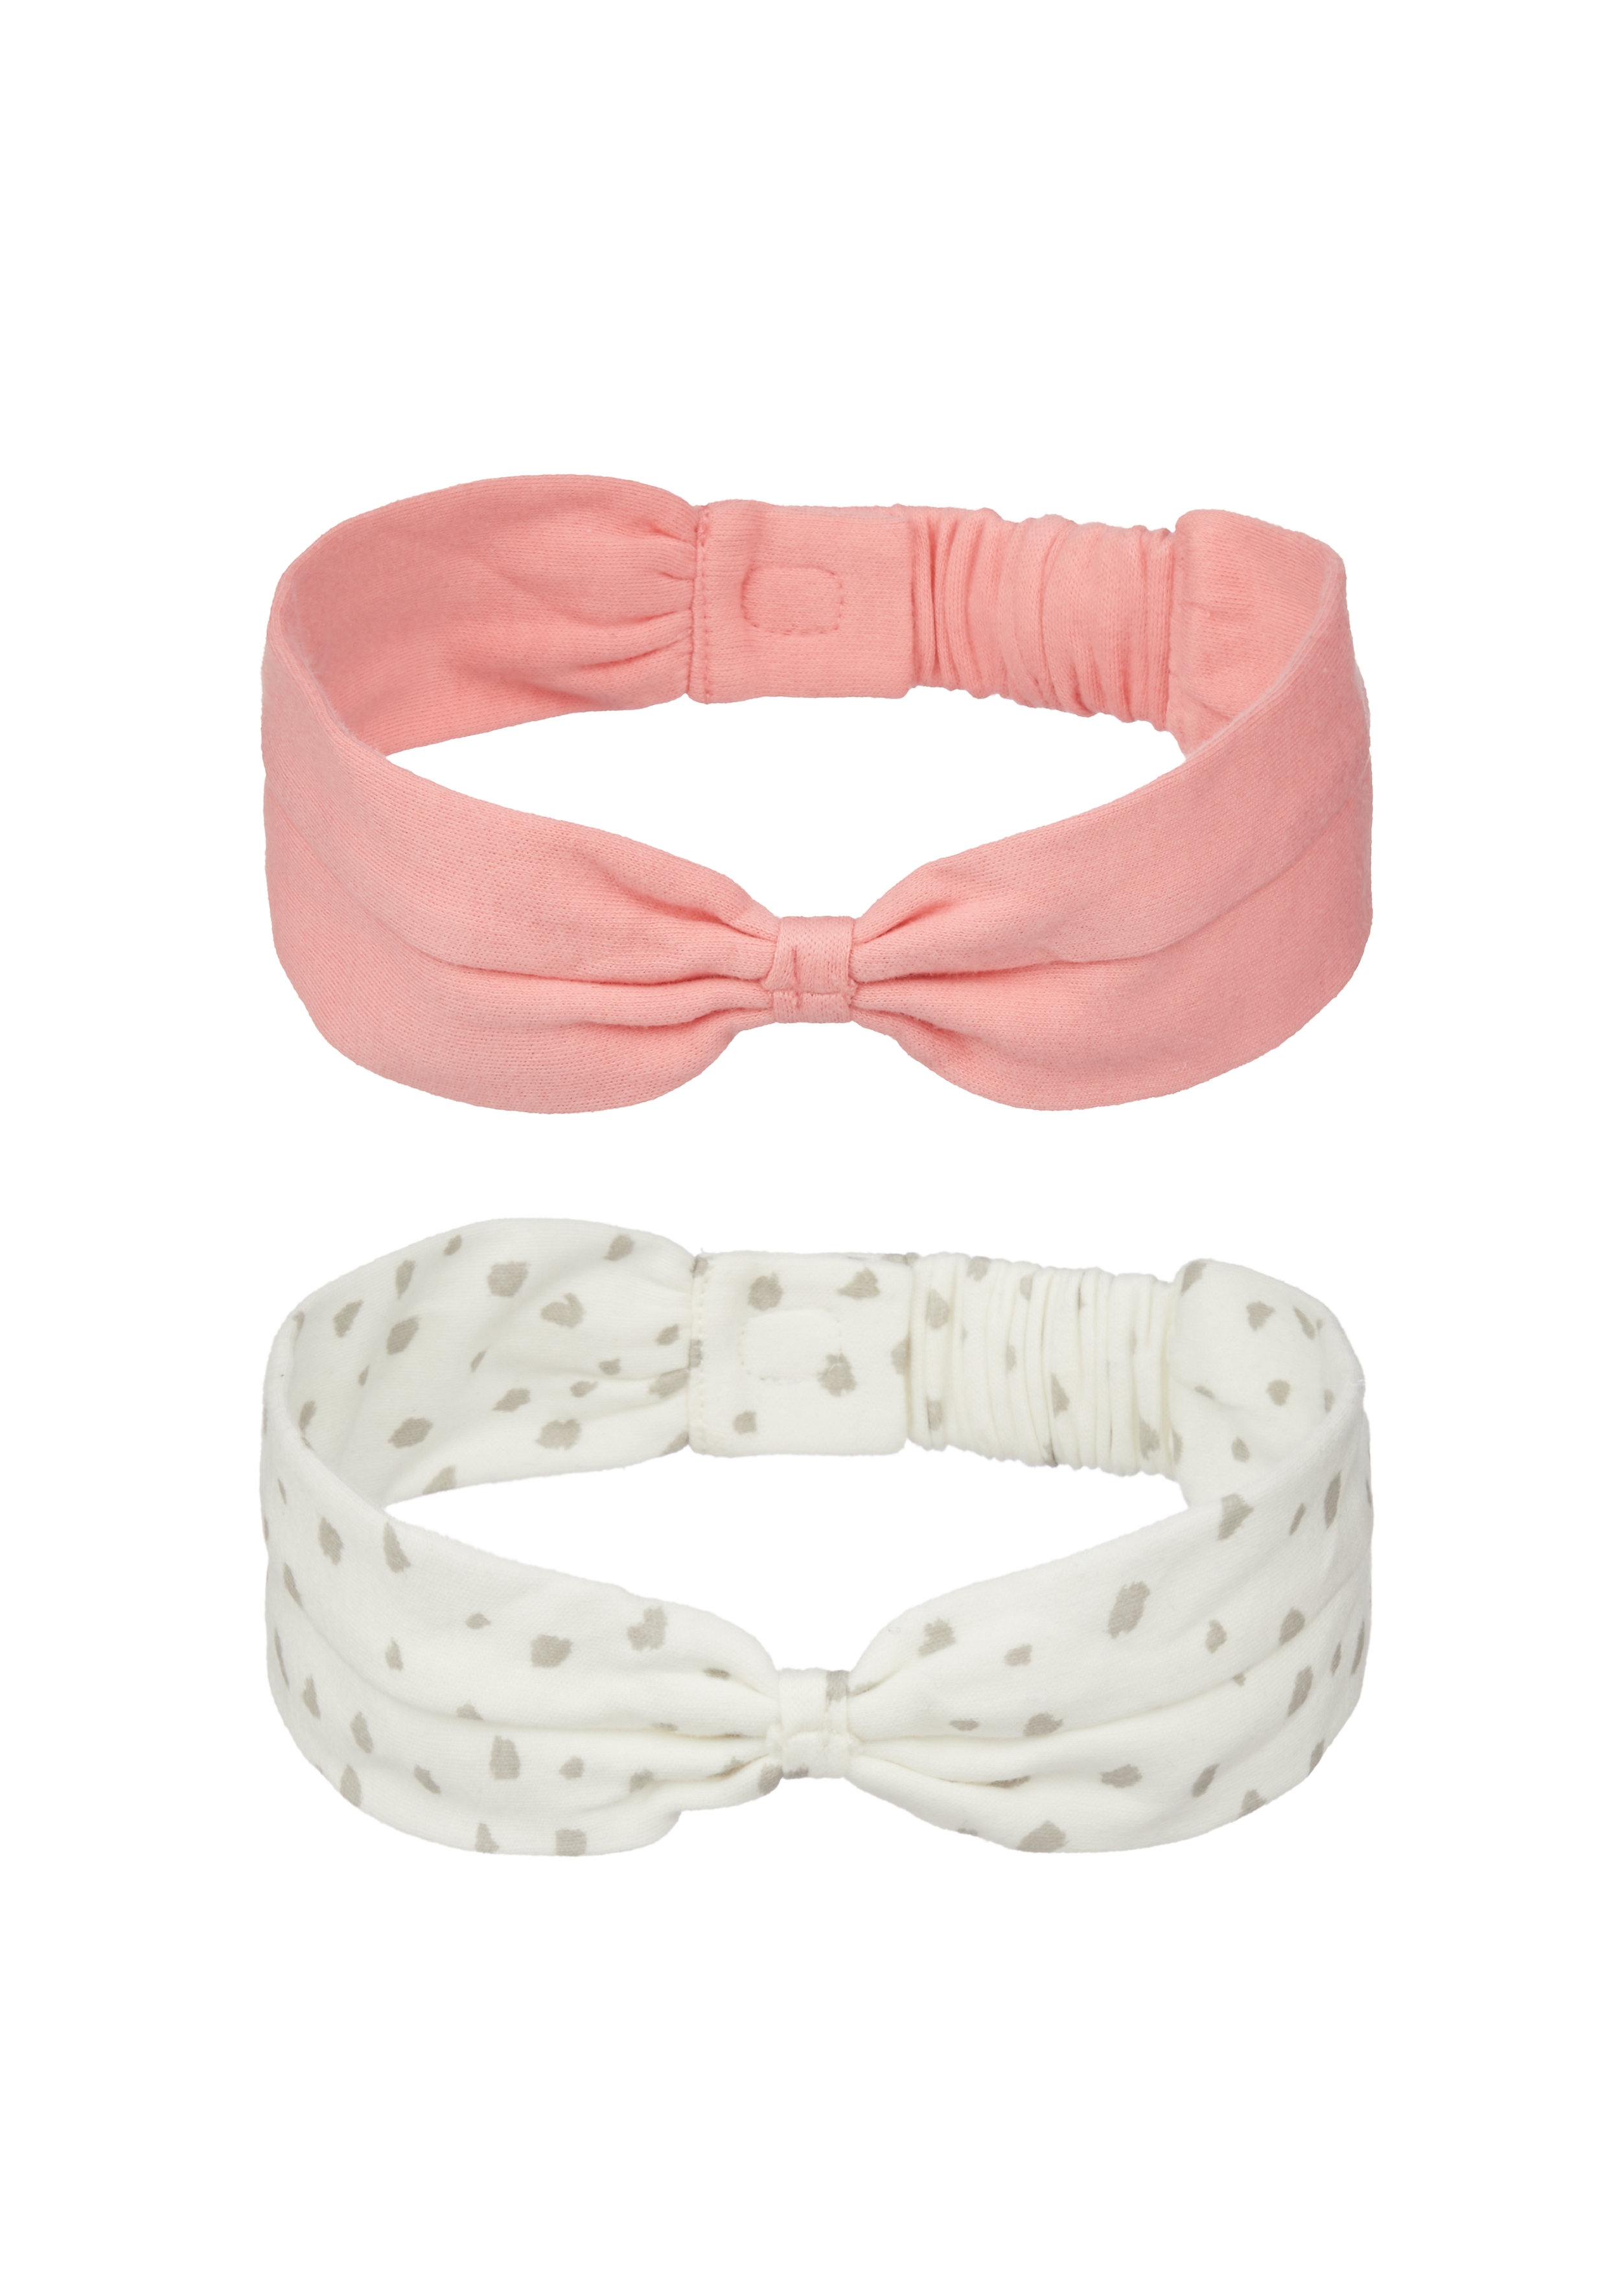 Girls Headbands Printed - Pack Of 2 - Pink White